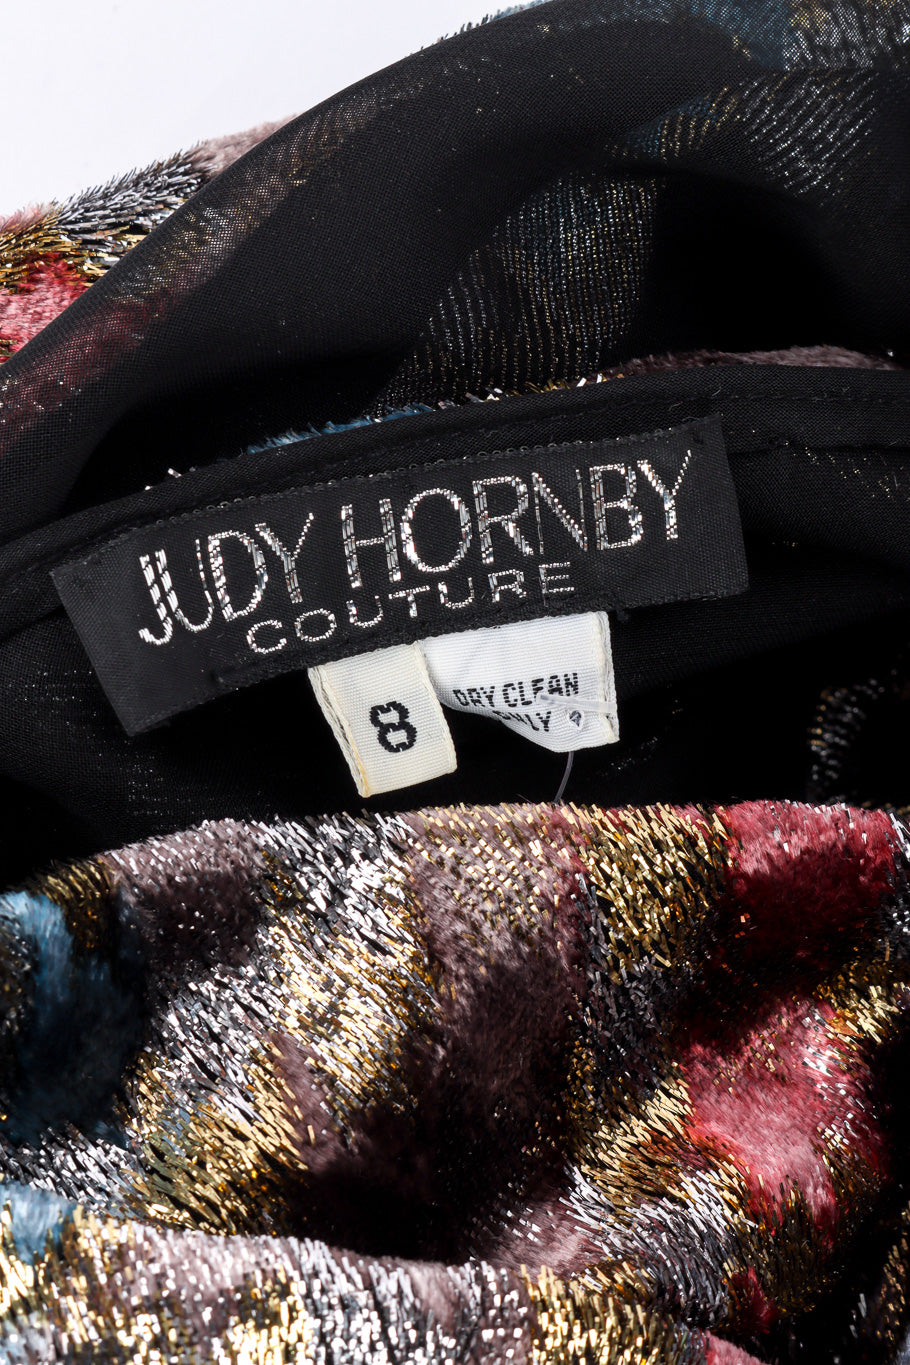 Vintage Judy Hornby Metallic Silk Velvet Dress signature label closeup @recessla